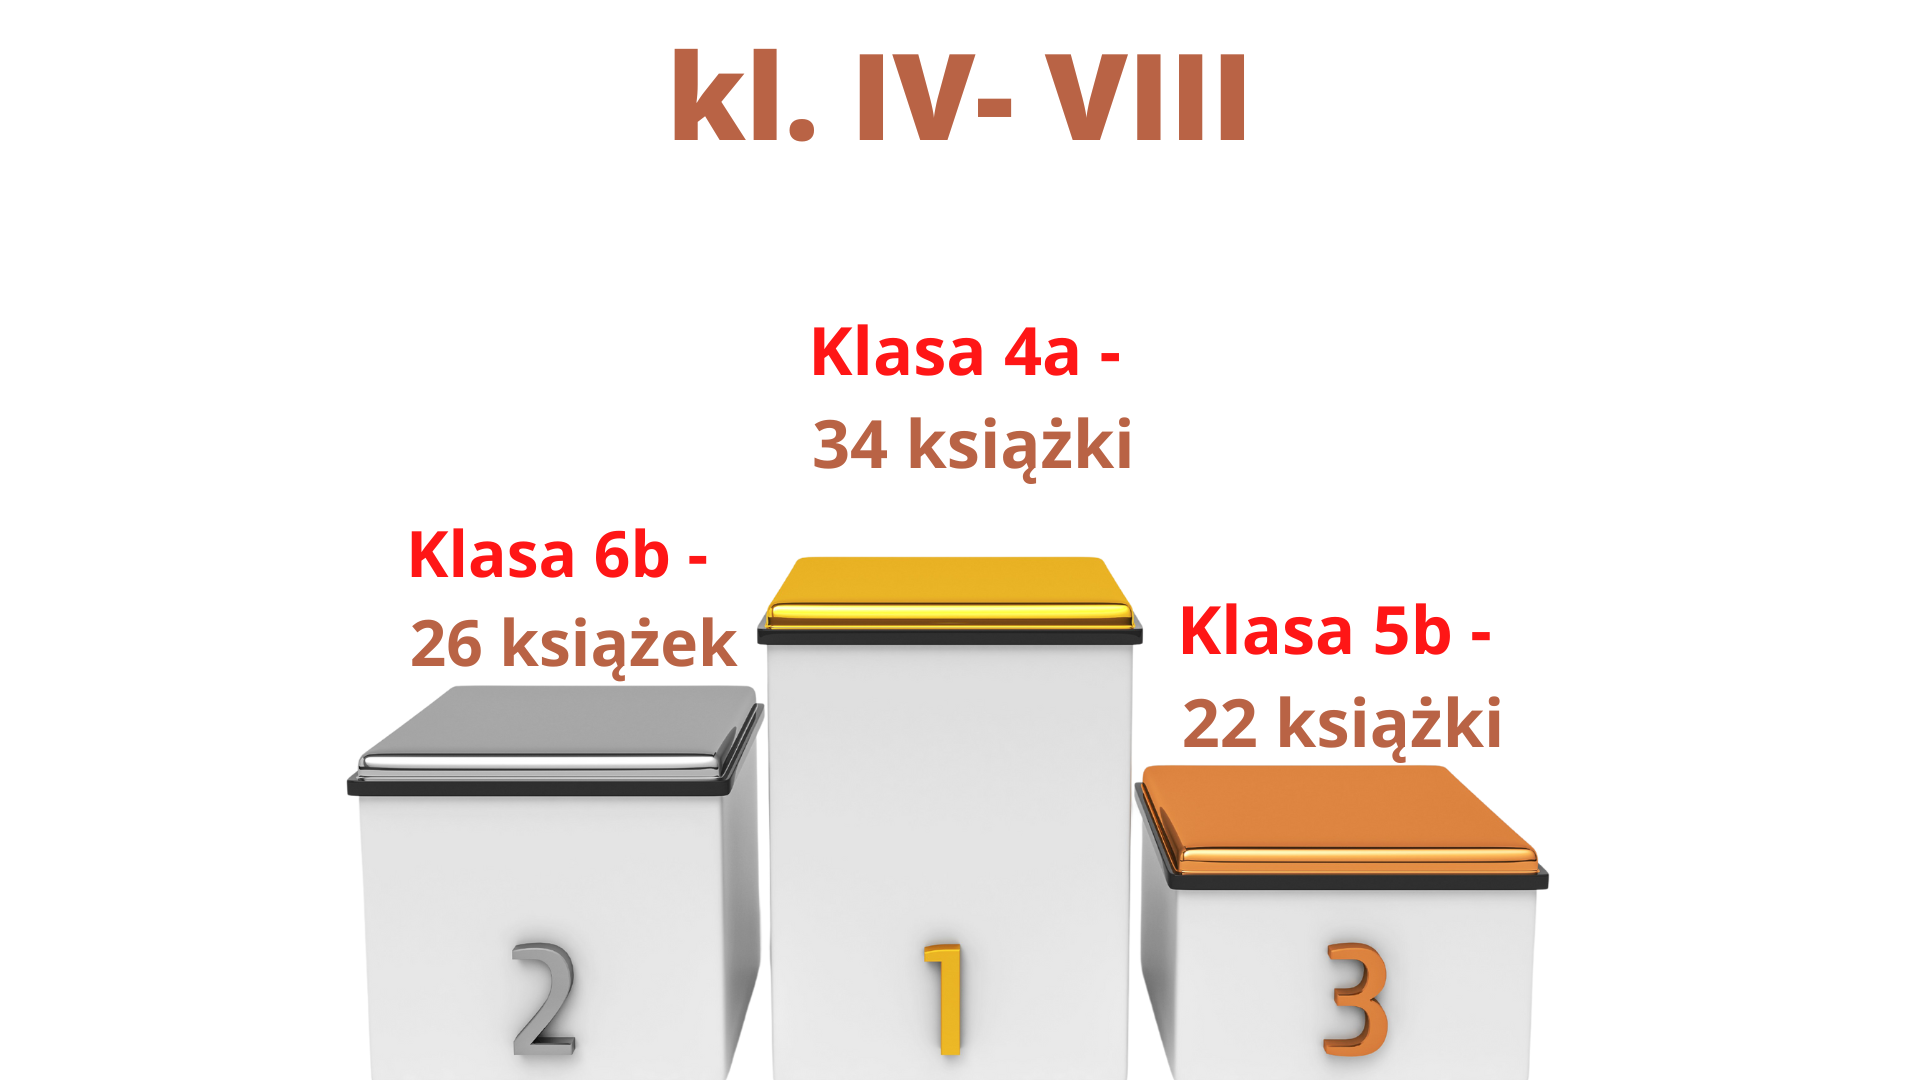 Ranking kl. IV-VIII.png